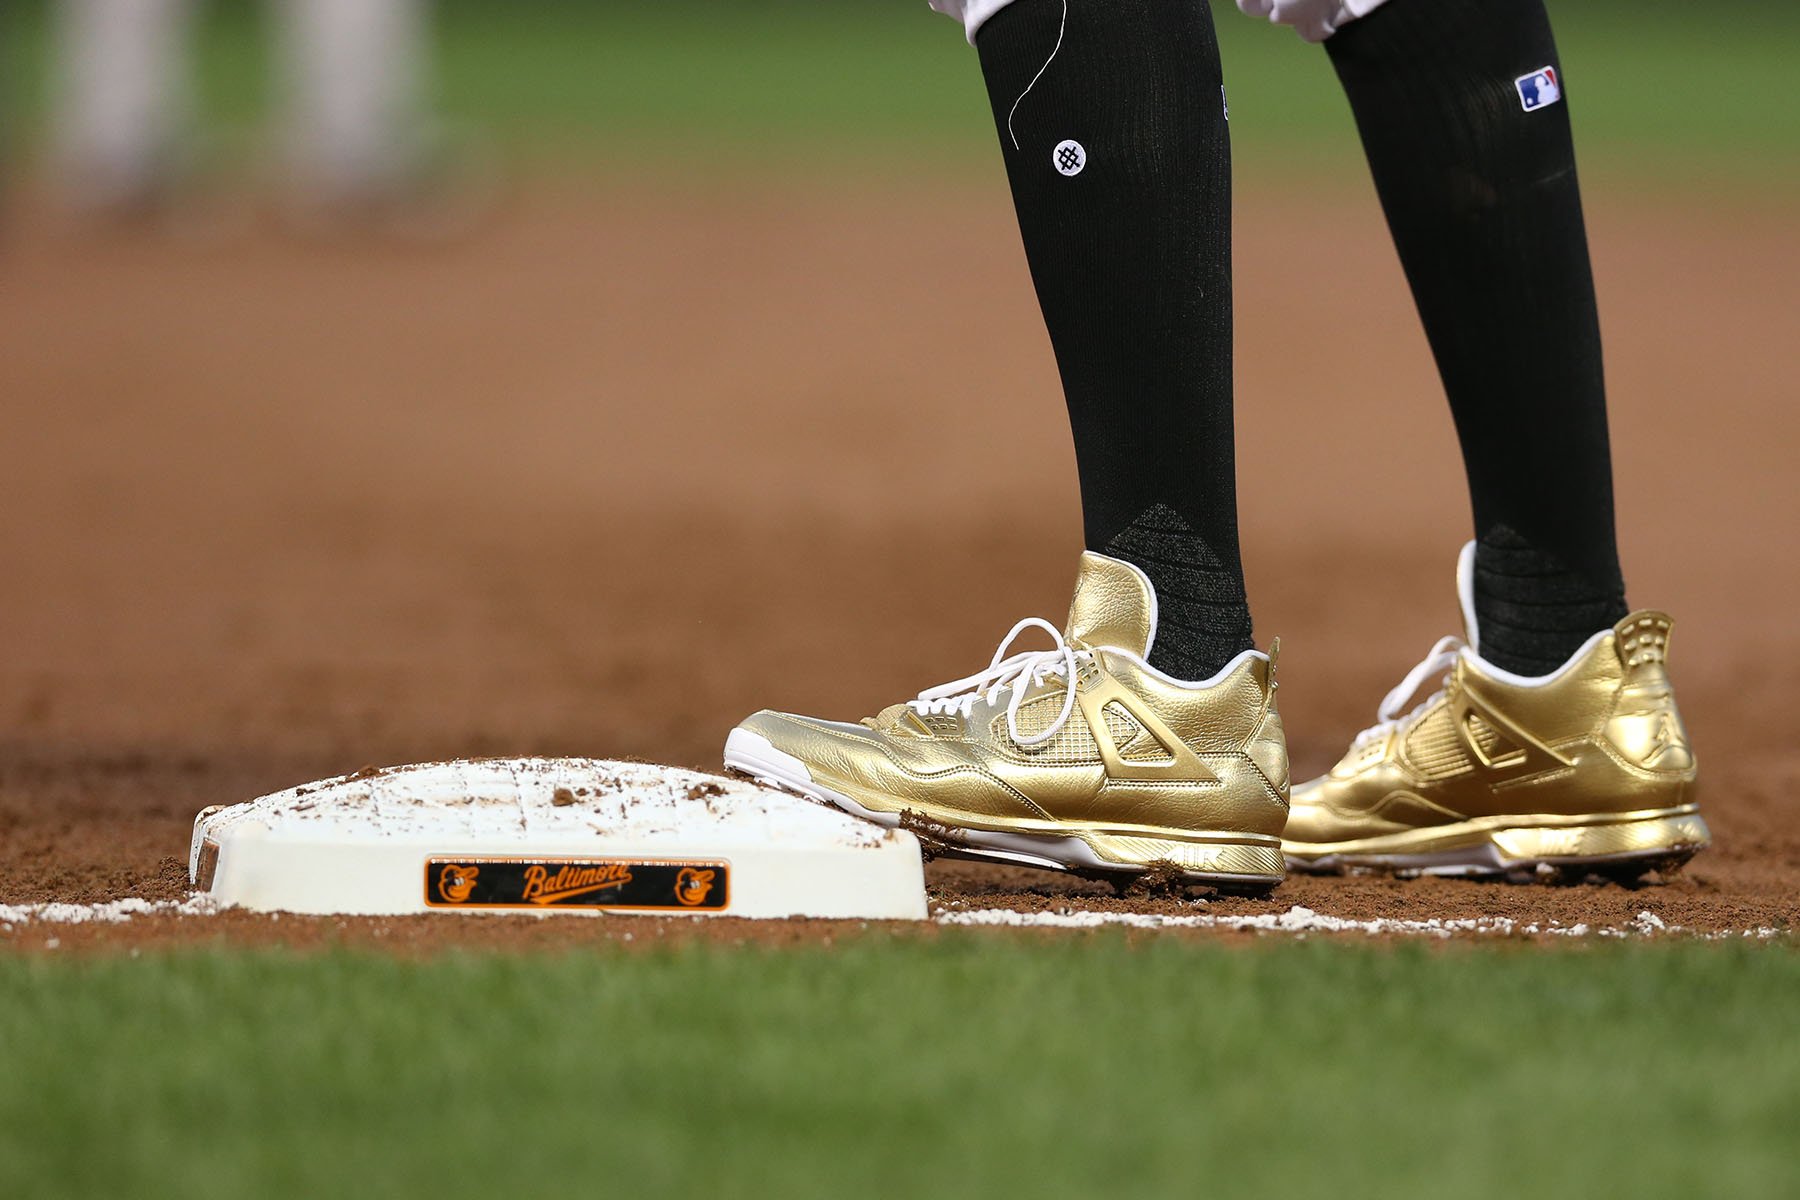 Baltimore Orioles on X: Manny Machado drew a walk, wearing these